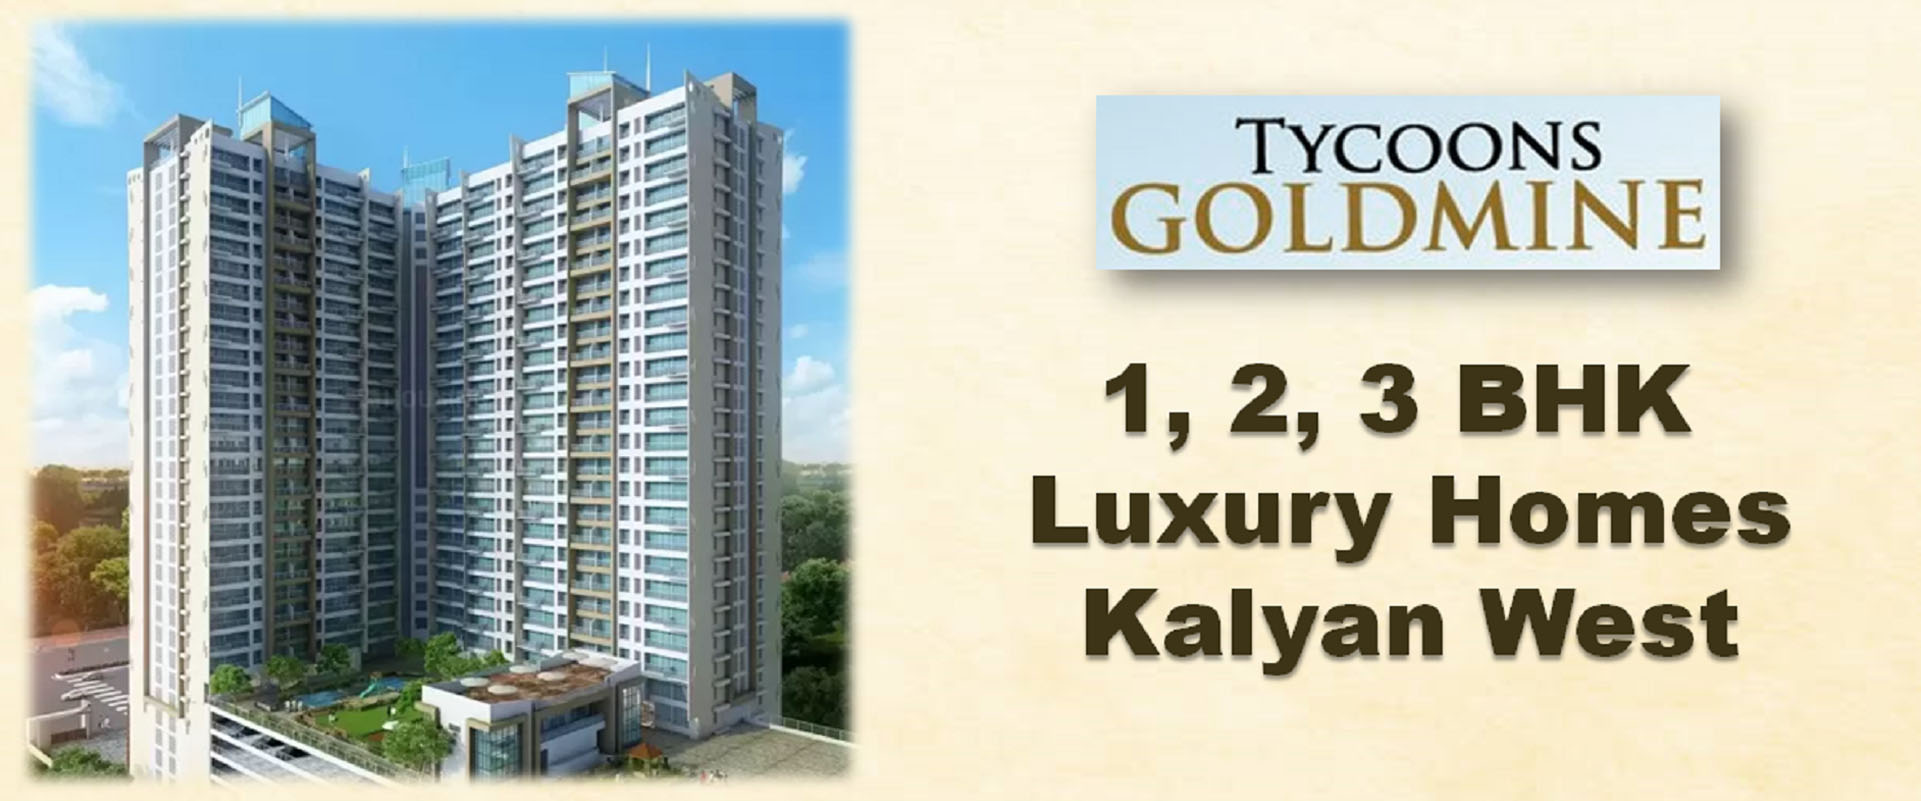 Tycoons Goldmine - Kalyan West, Thane 